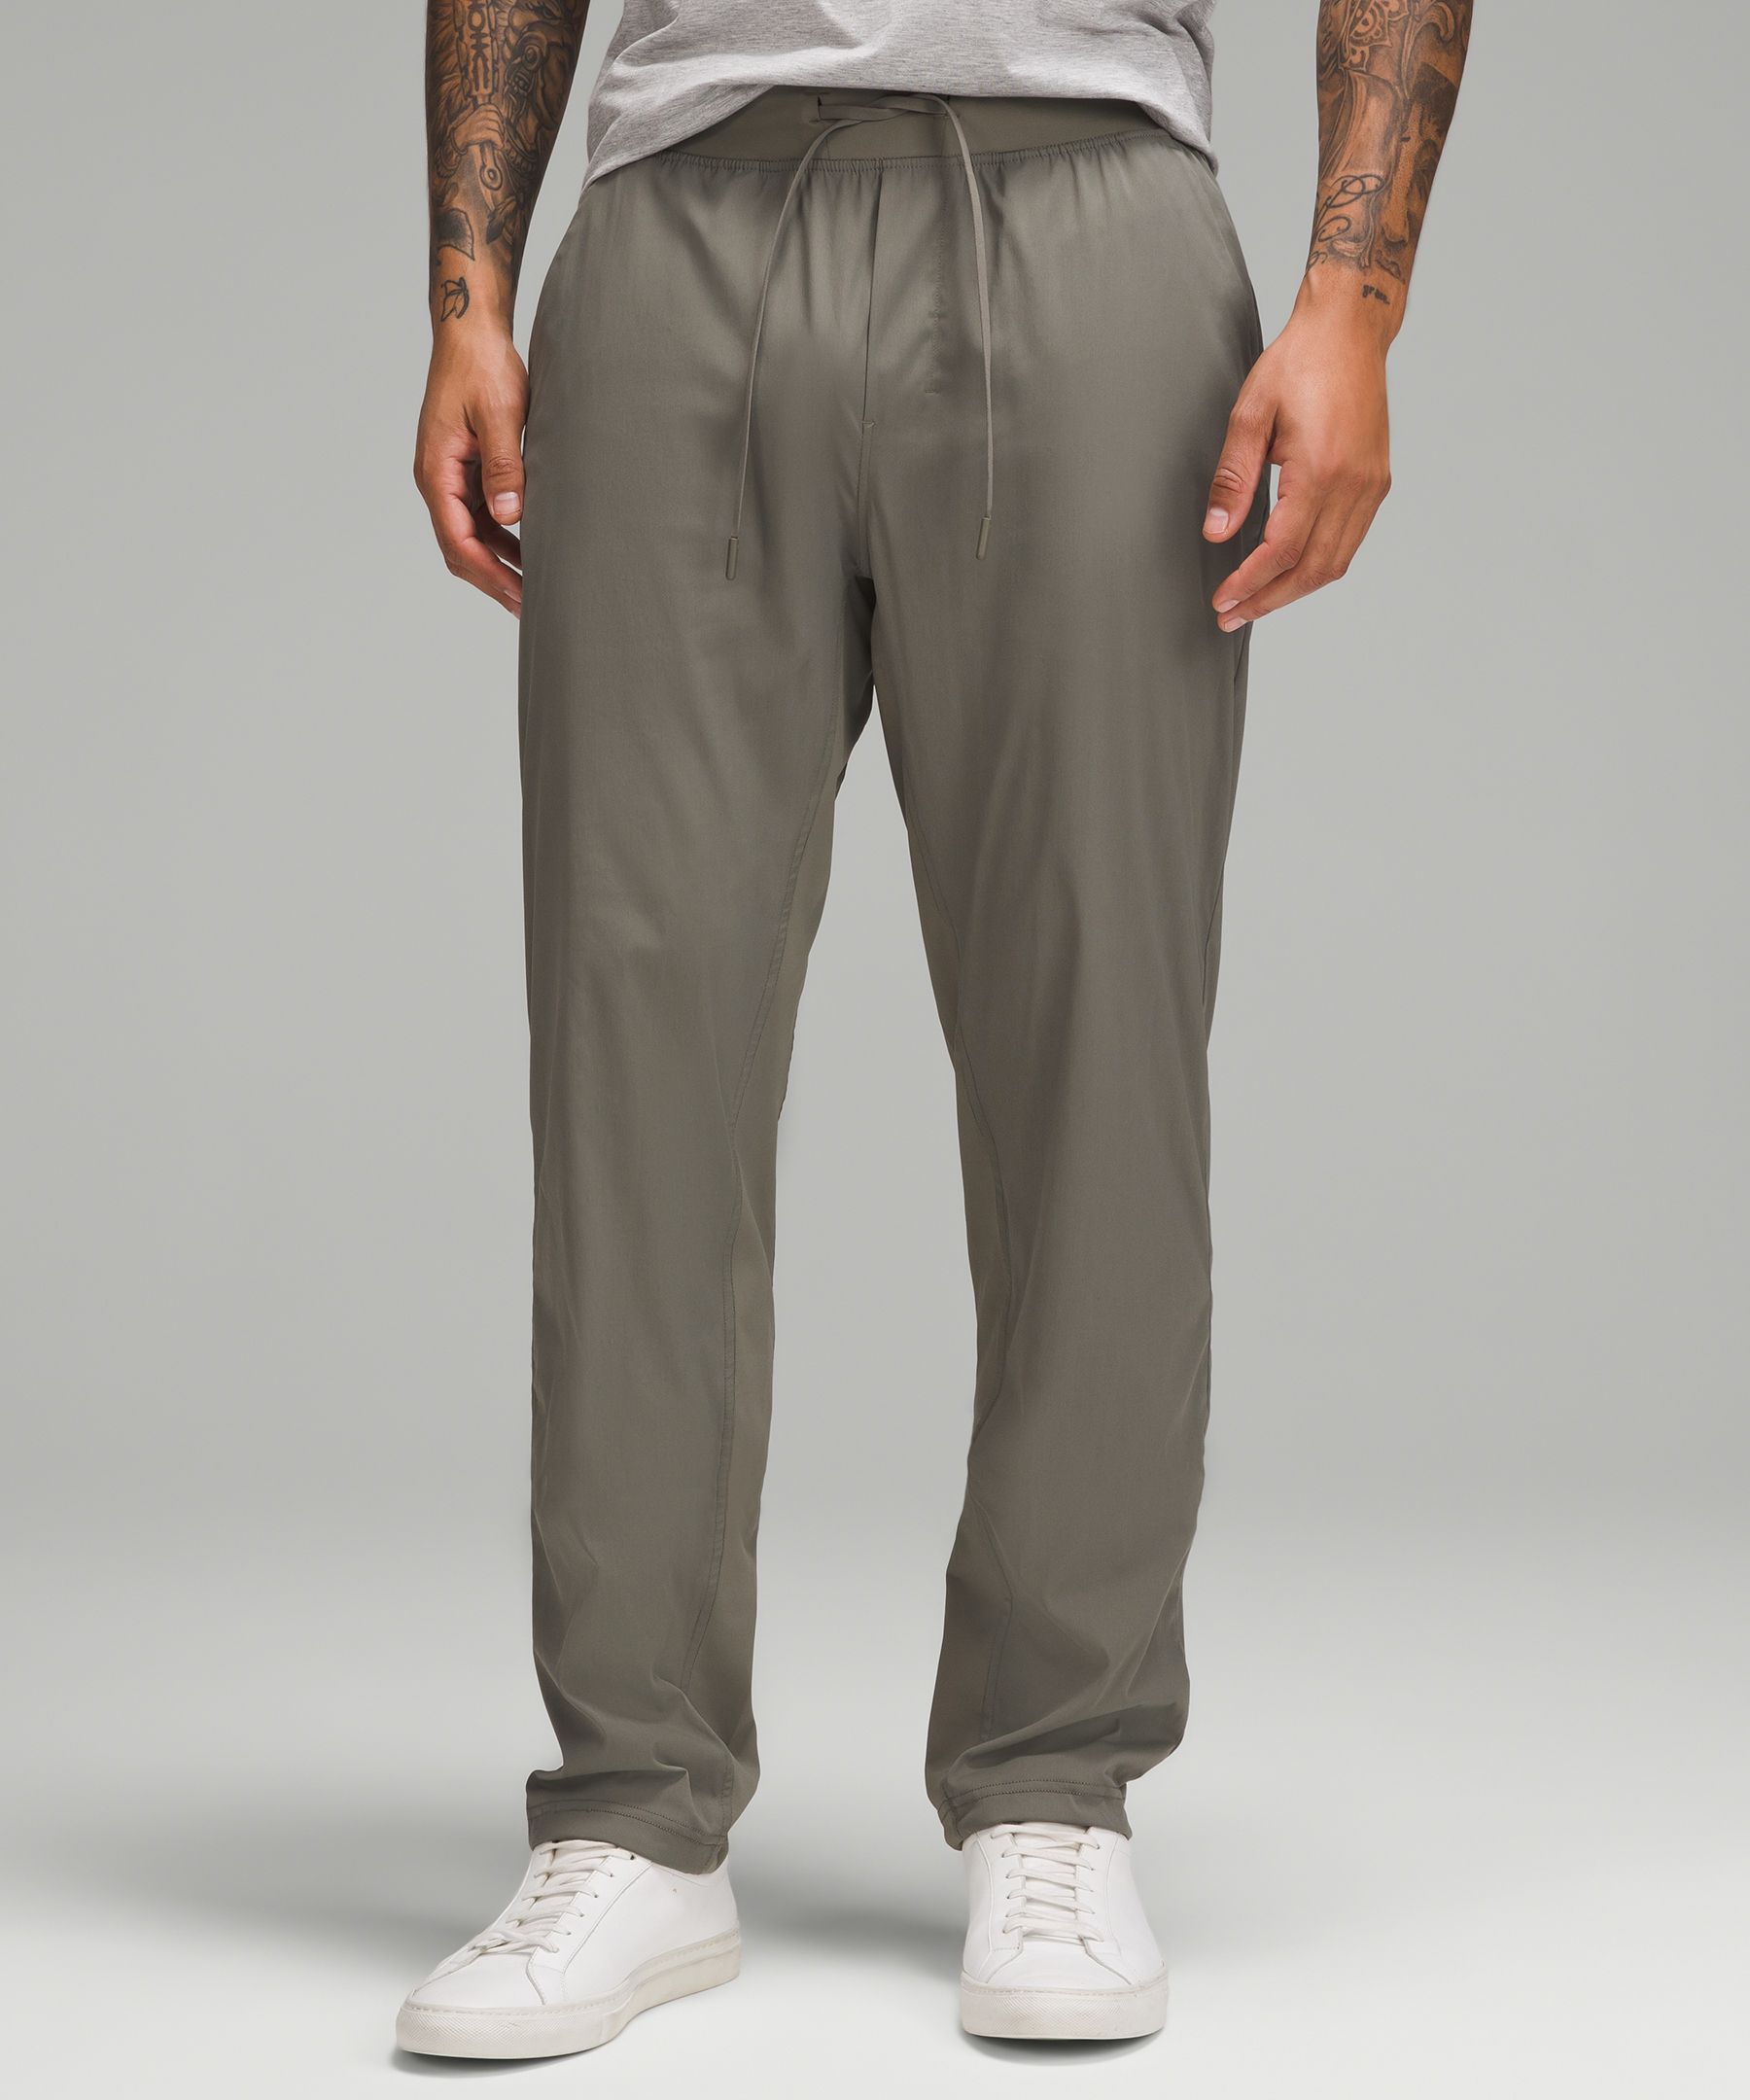 lululemon athletica Button Casual Pants for Men